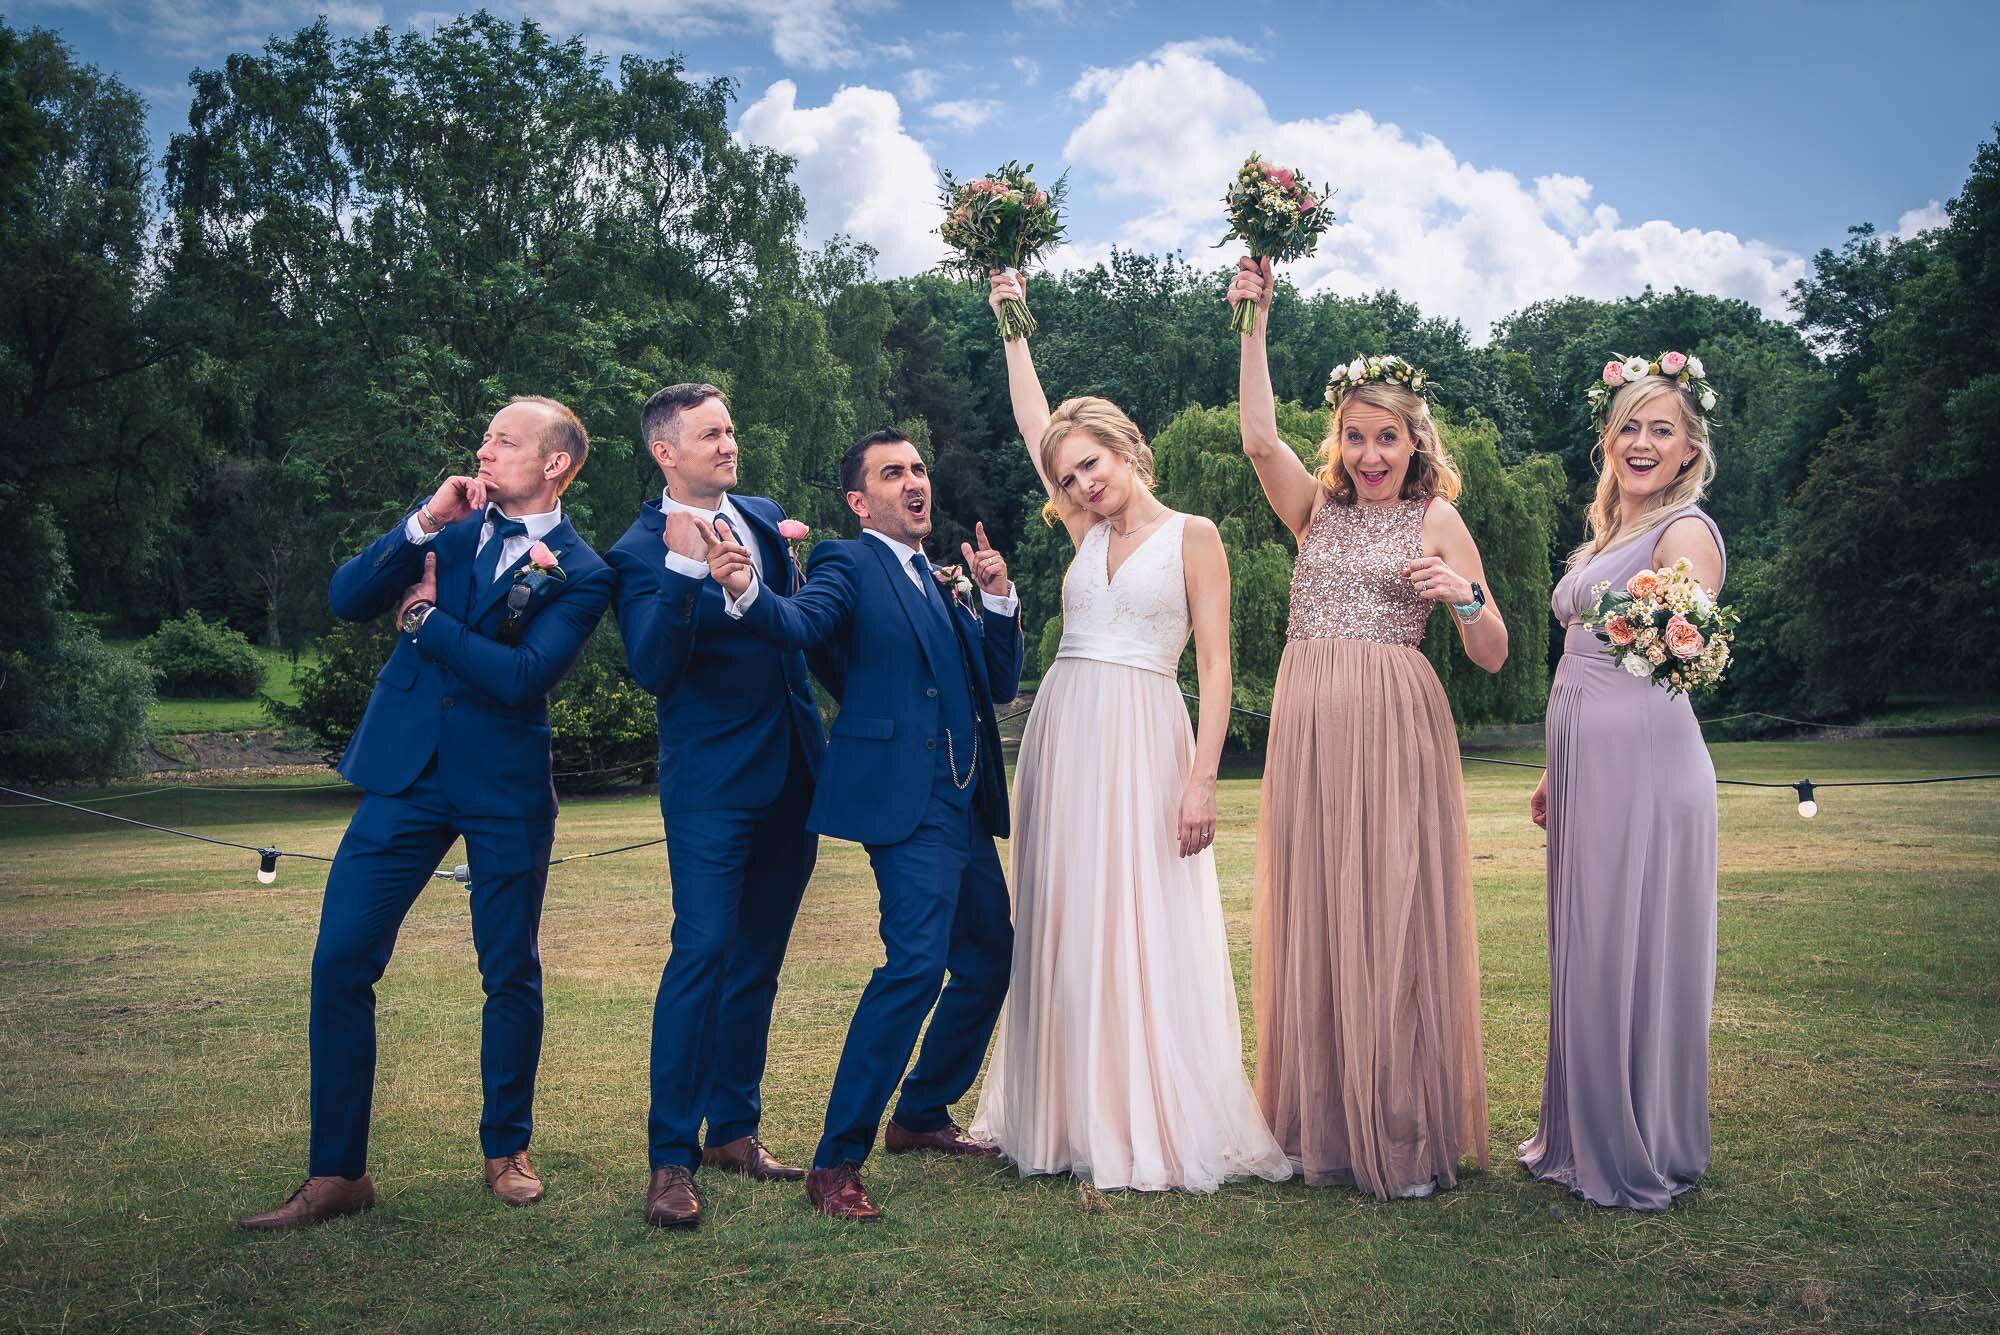 wedding-photography-country-tipis-hertford-hertfordshire-pike-photography-2020-22.jpg